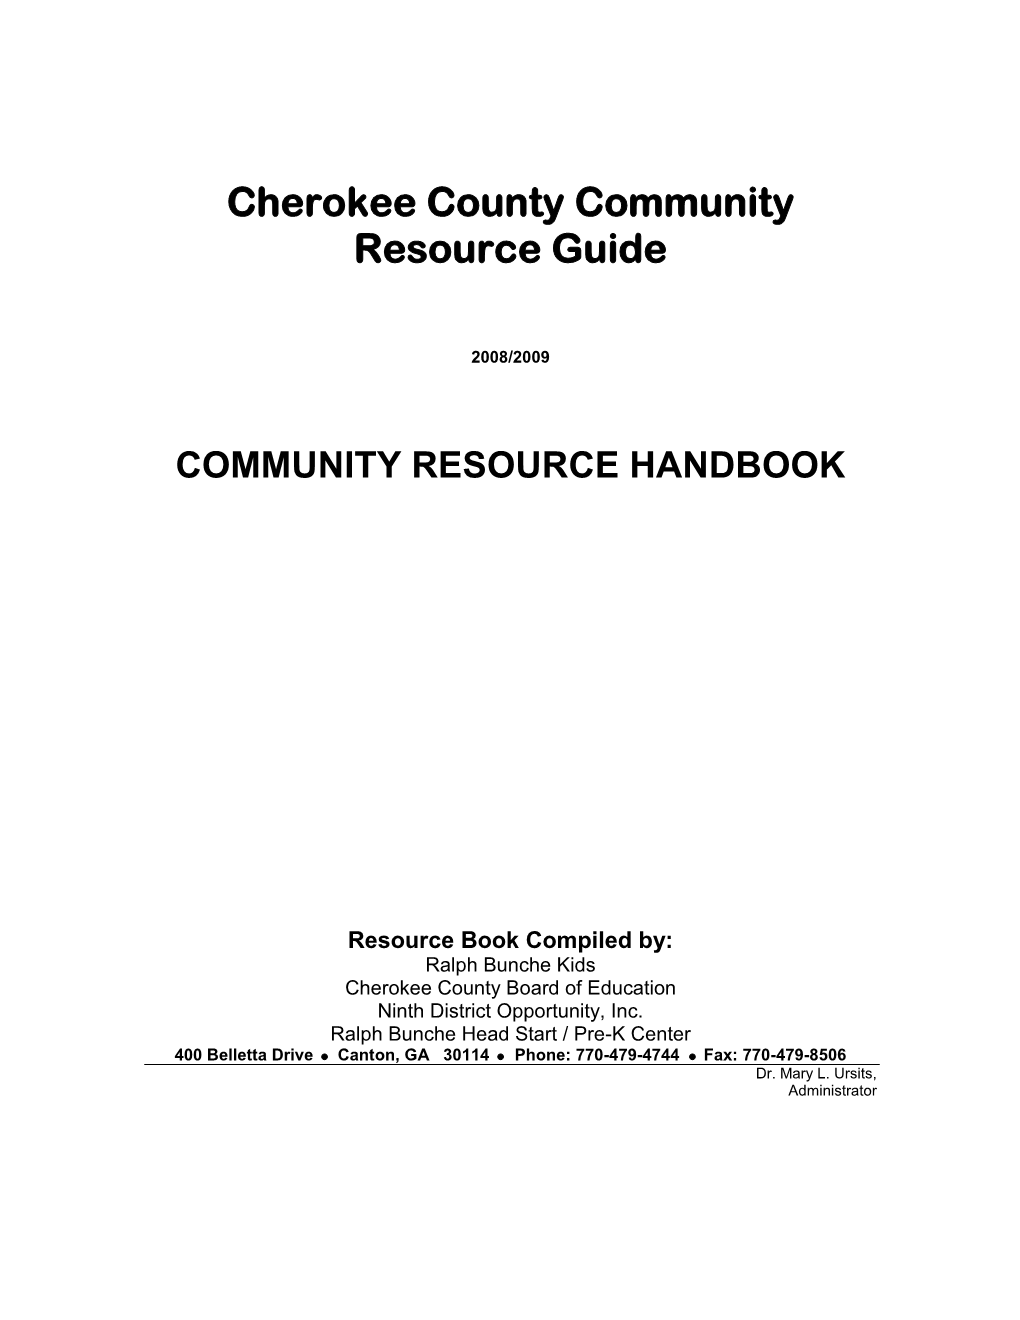 Cherokee County Community Resource Guide